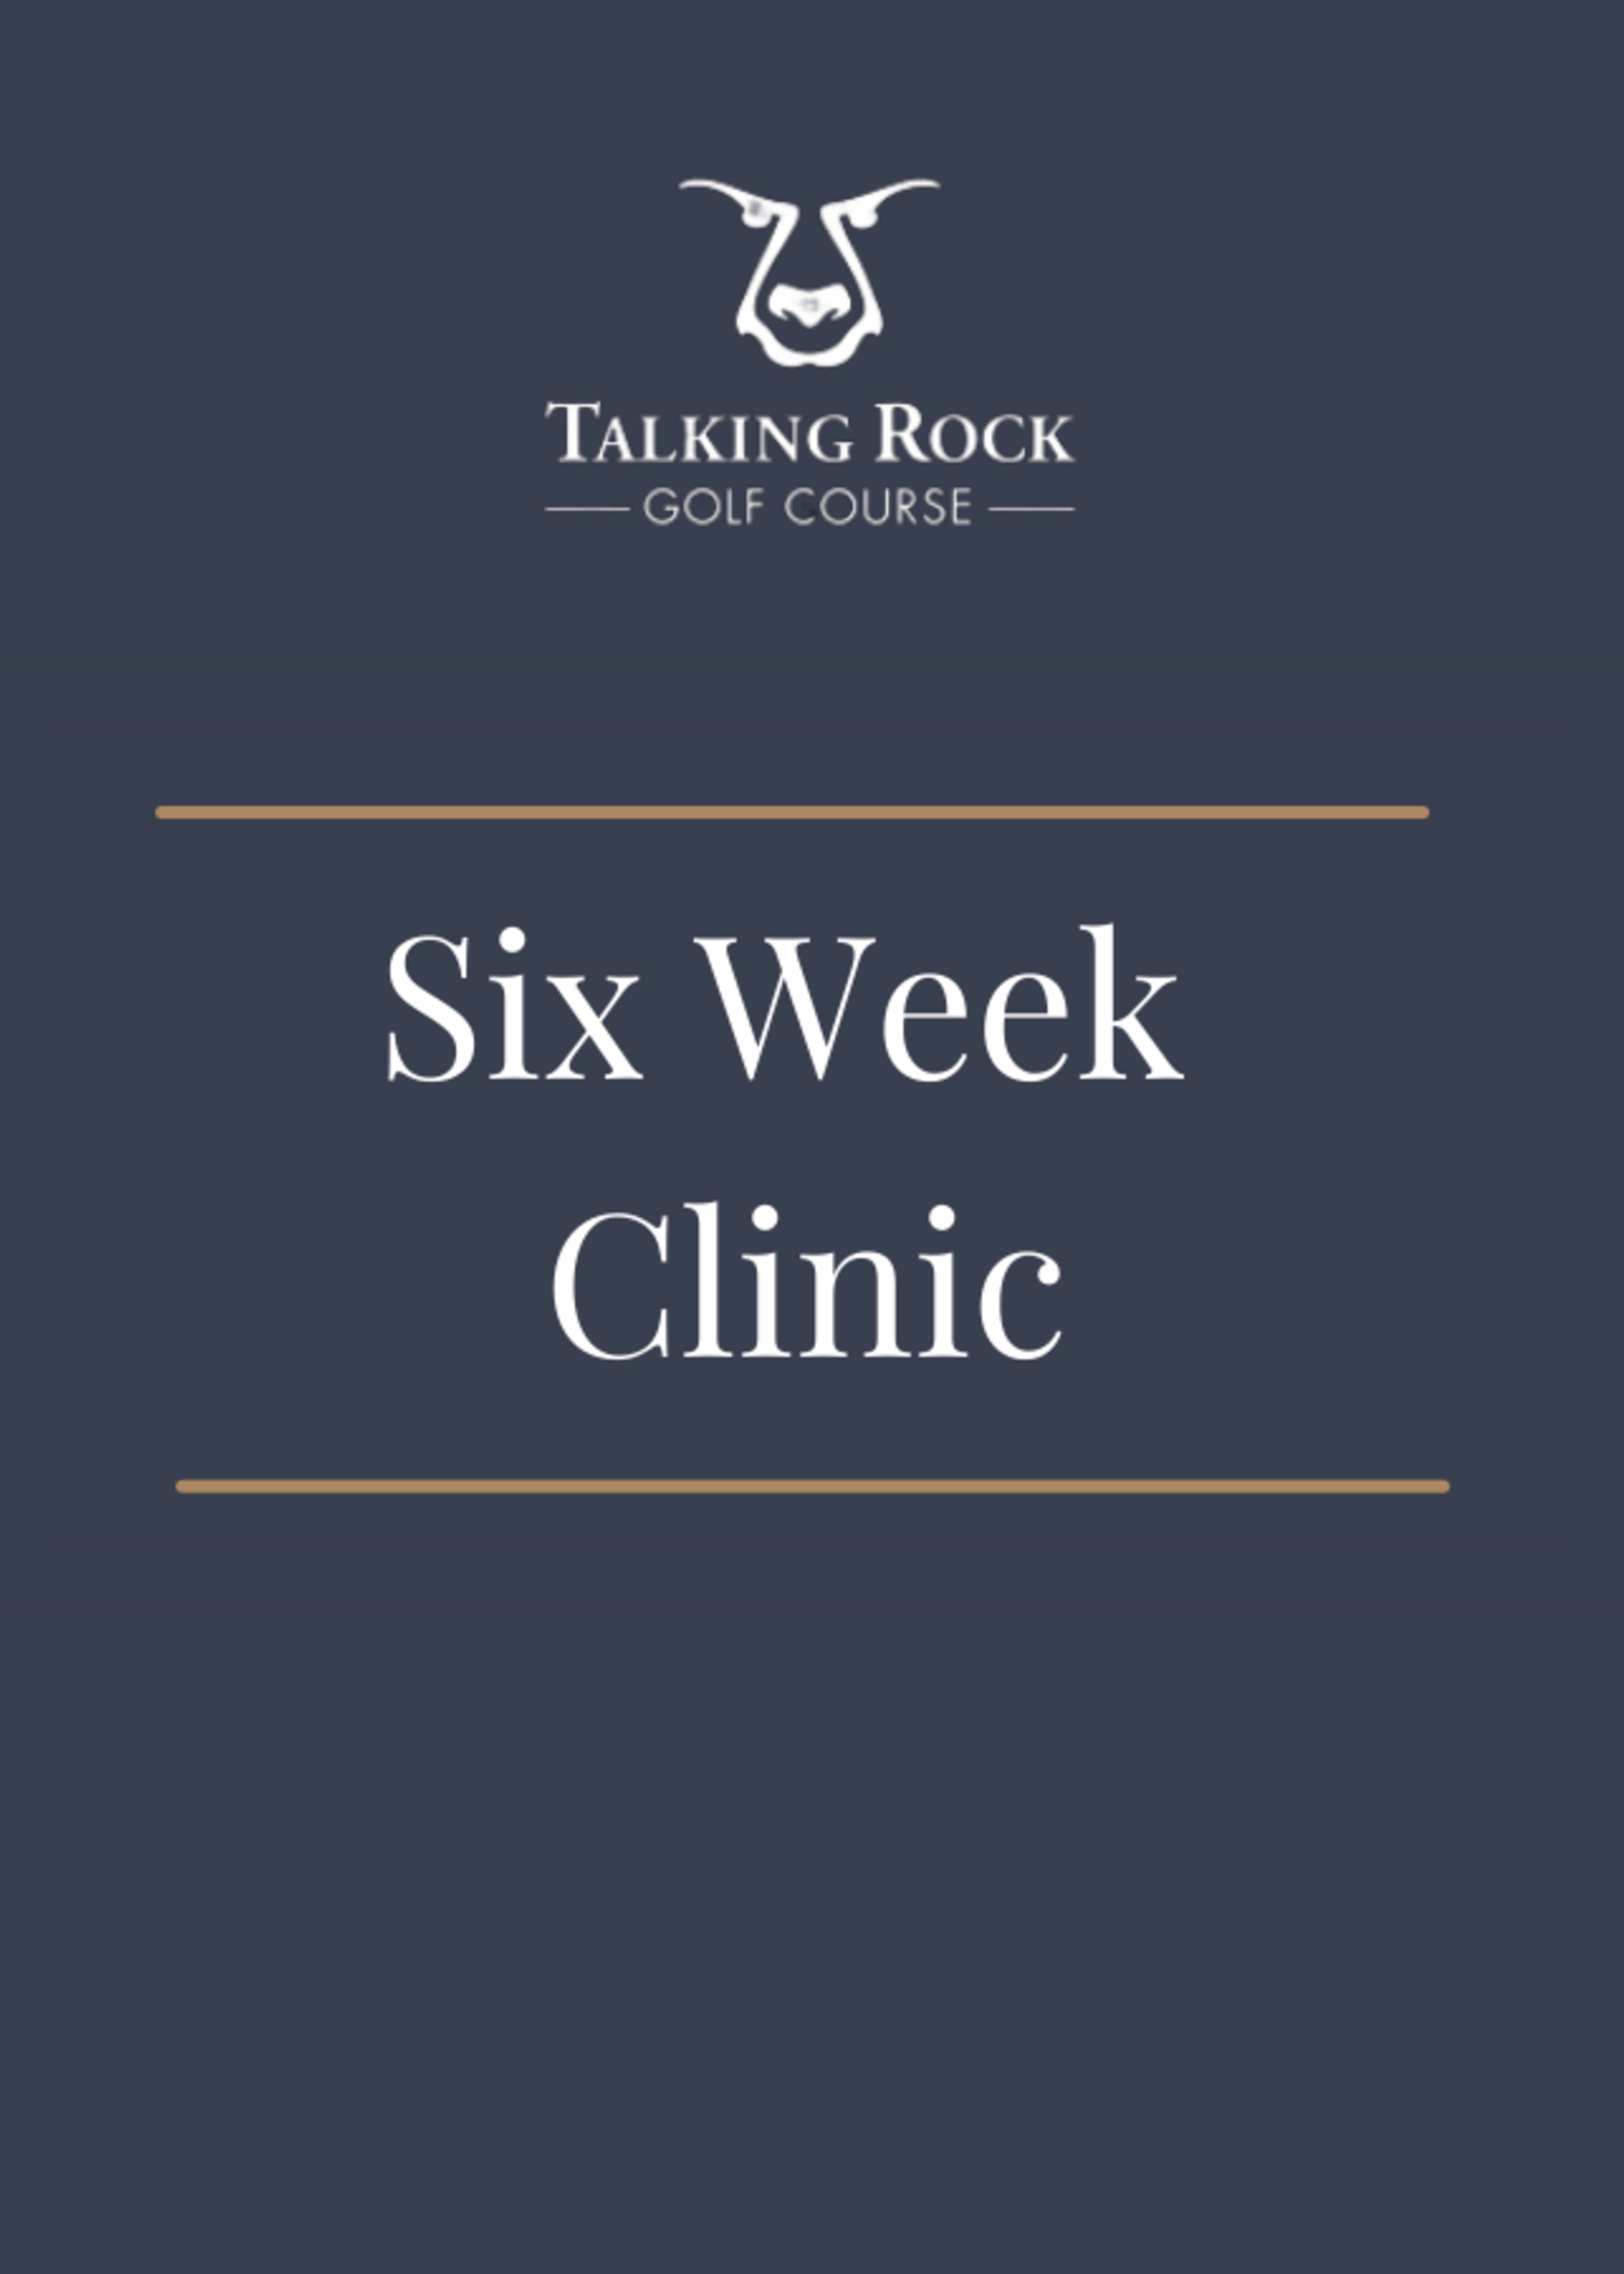 Six Week Clinic